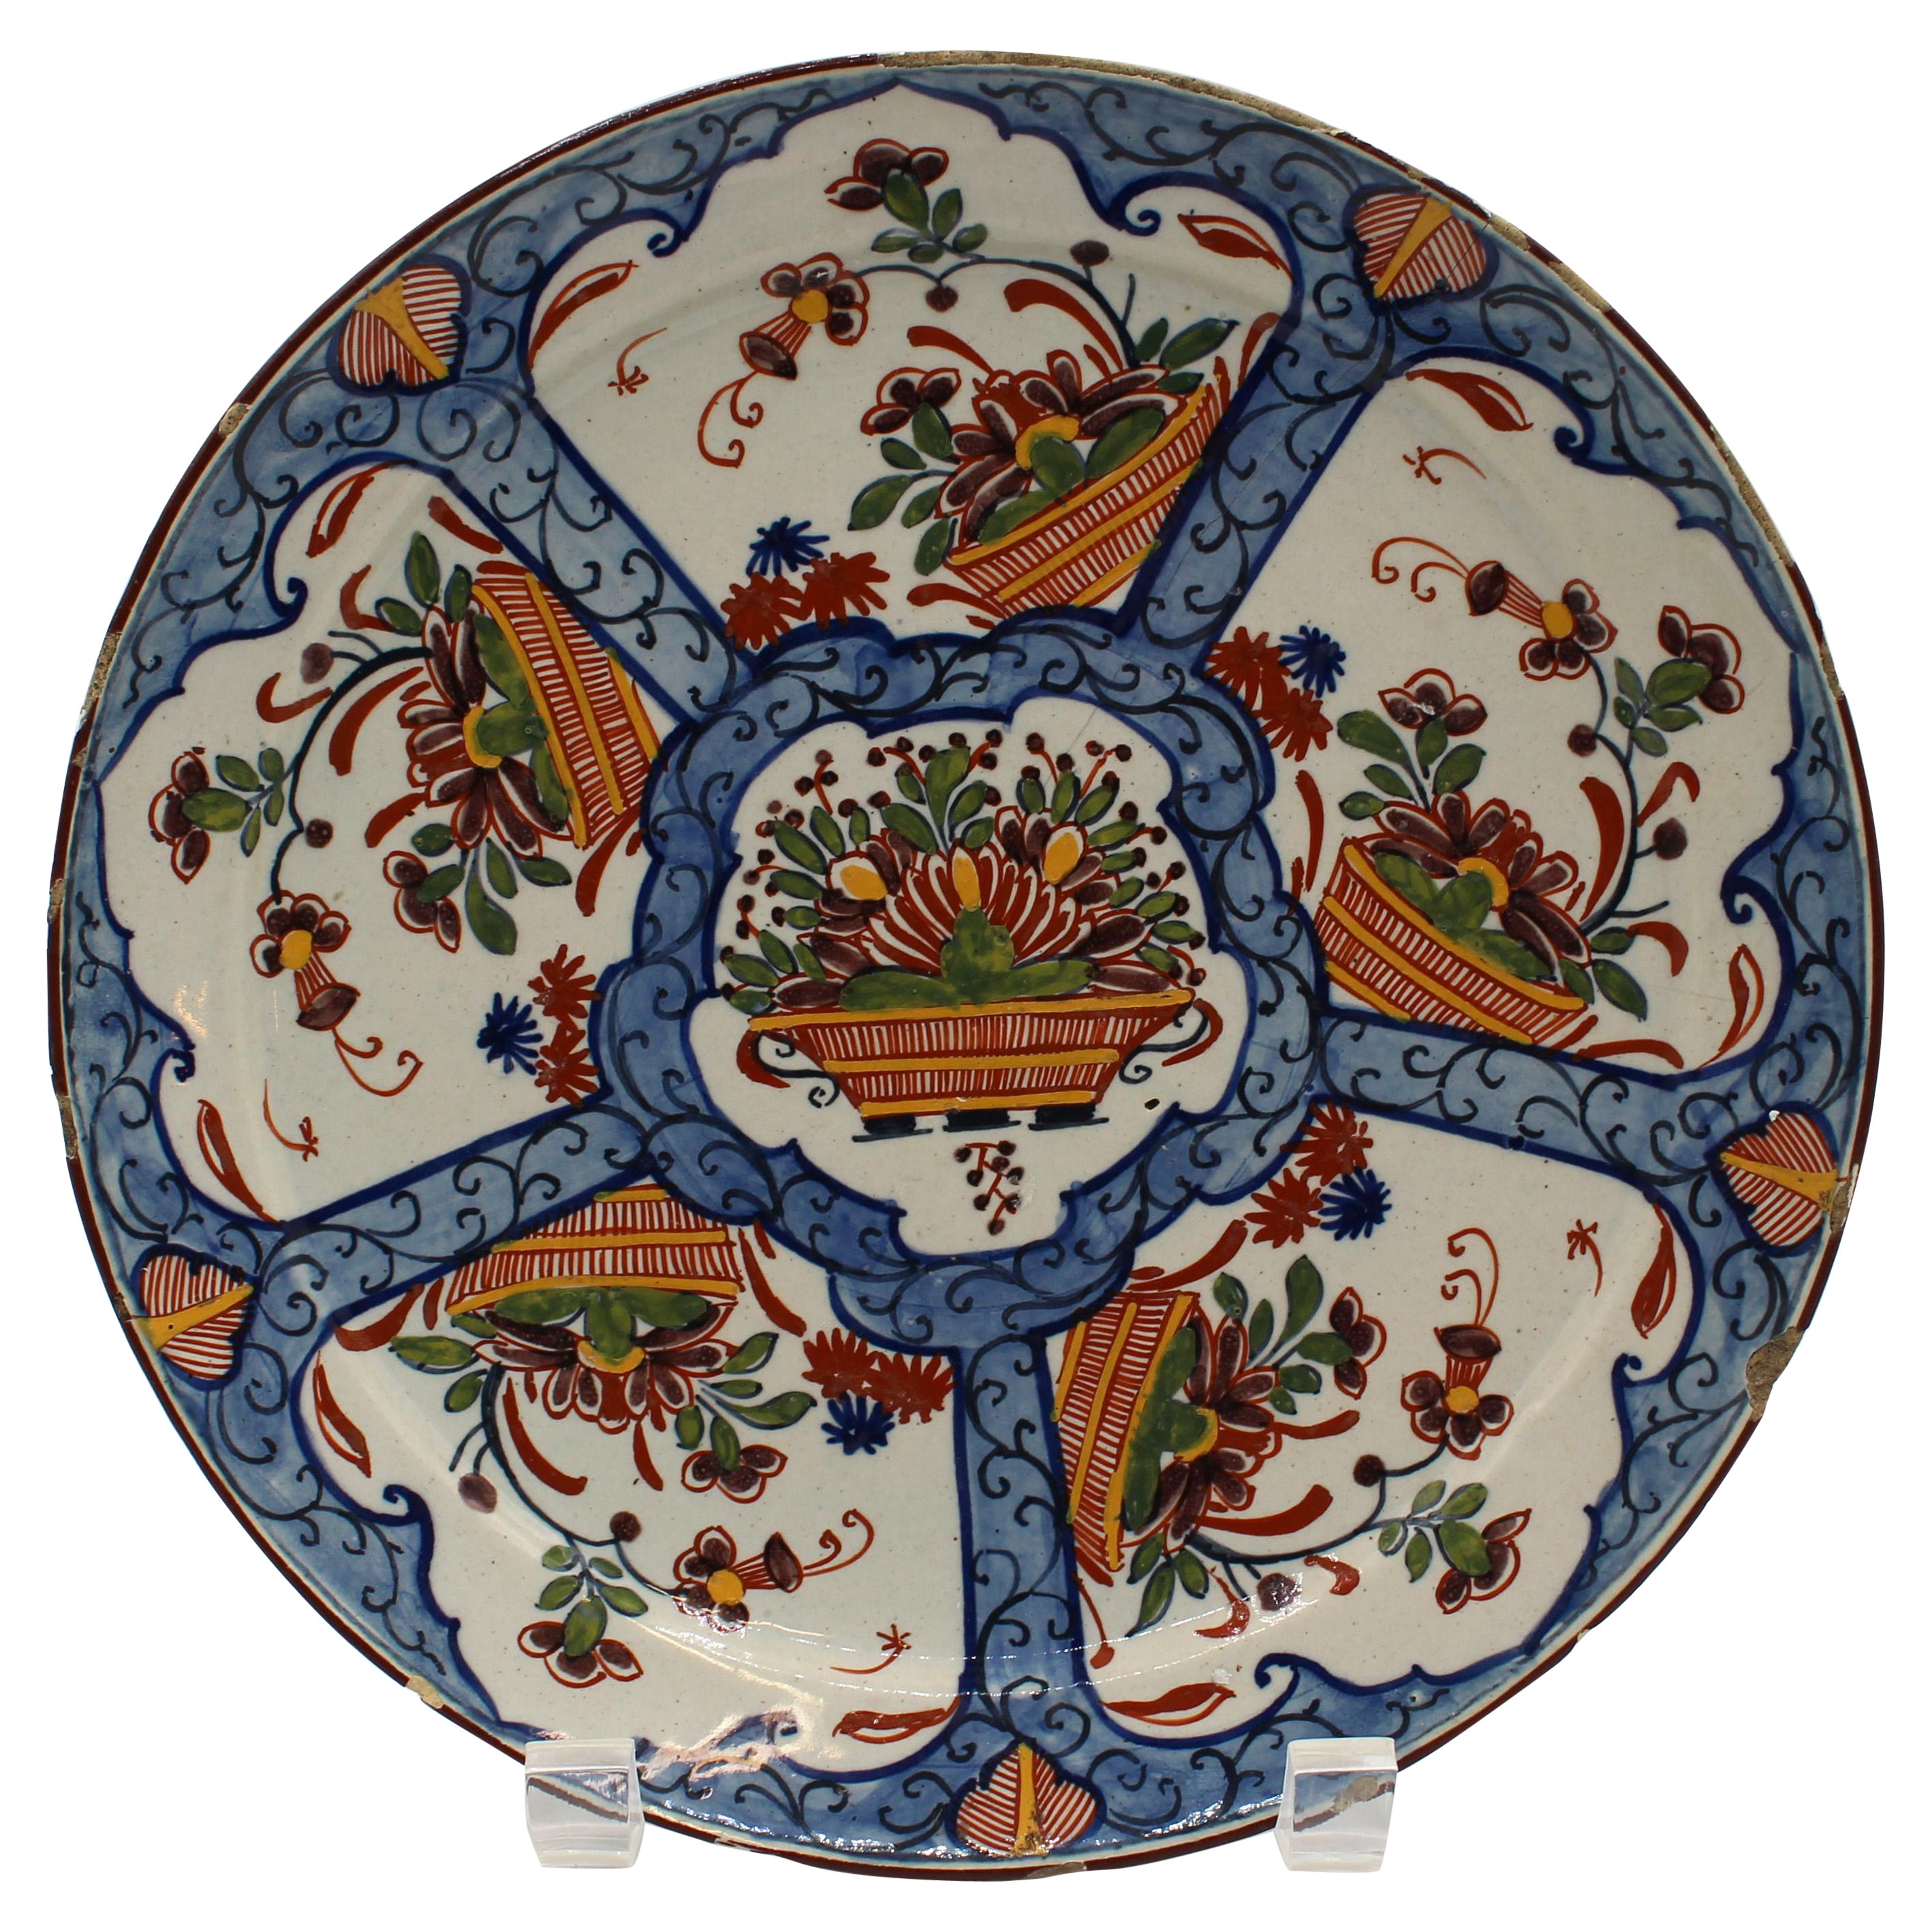 Circa 1770 Delft Polychrome Plate